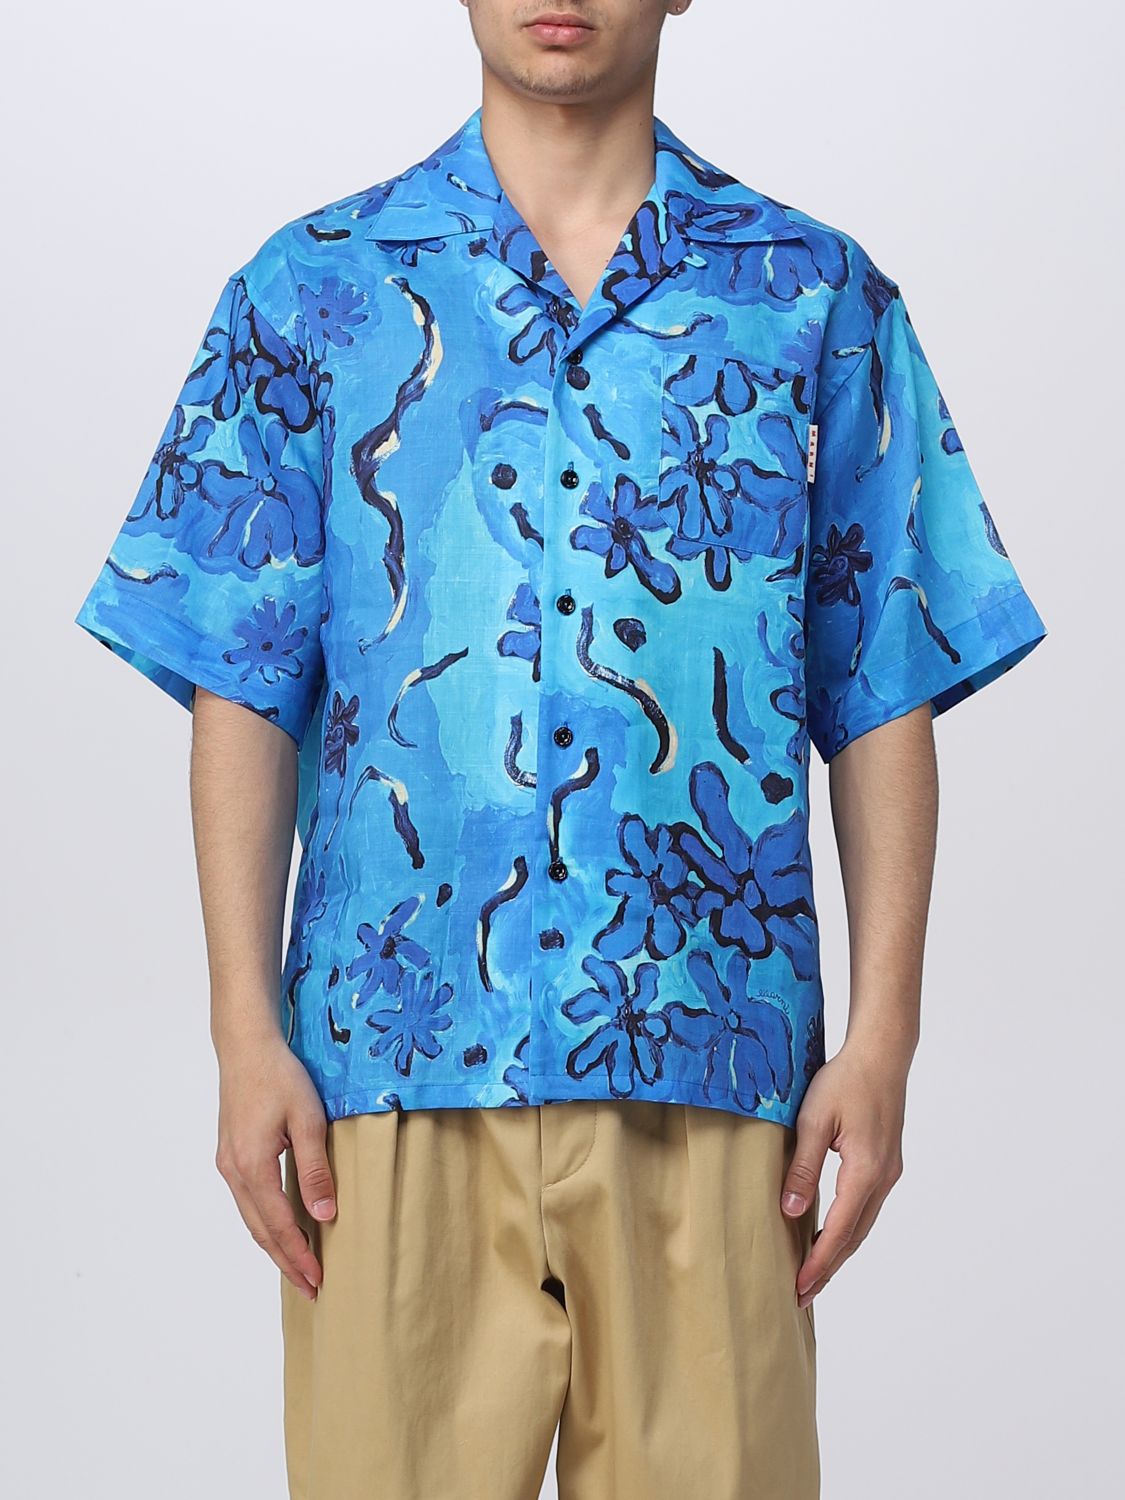 MARNI: shirt for man - Gnawed Blue | Marni shirt CUMU0213M1UTR026 ...